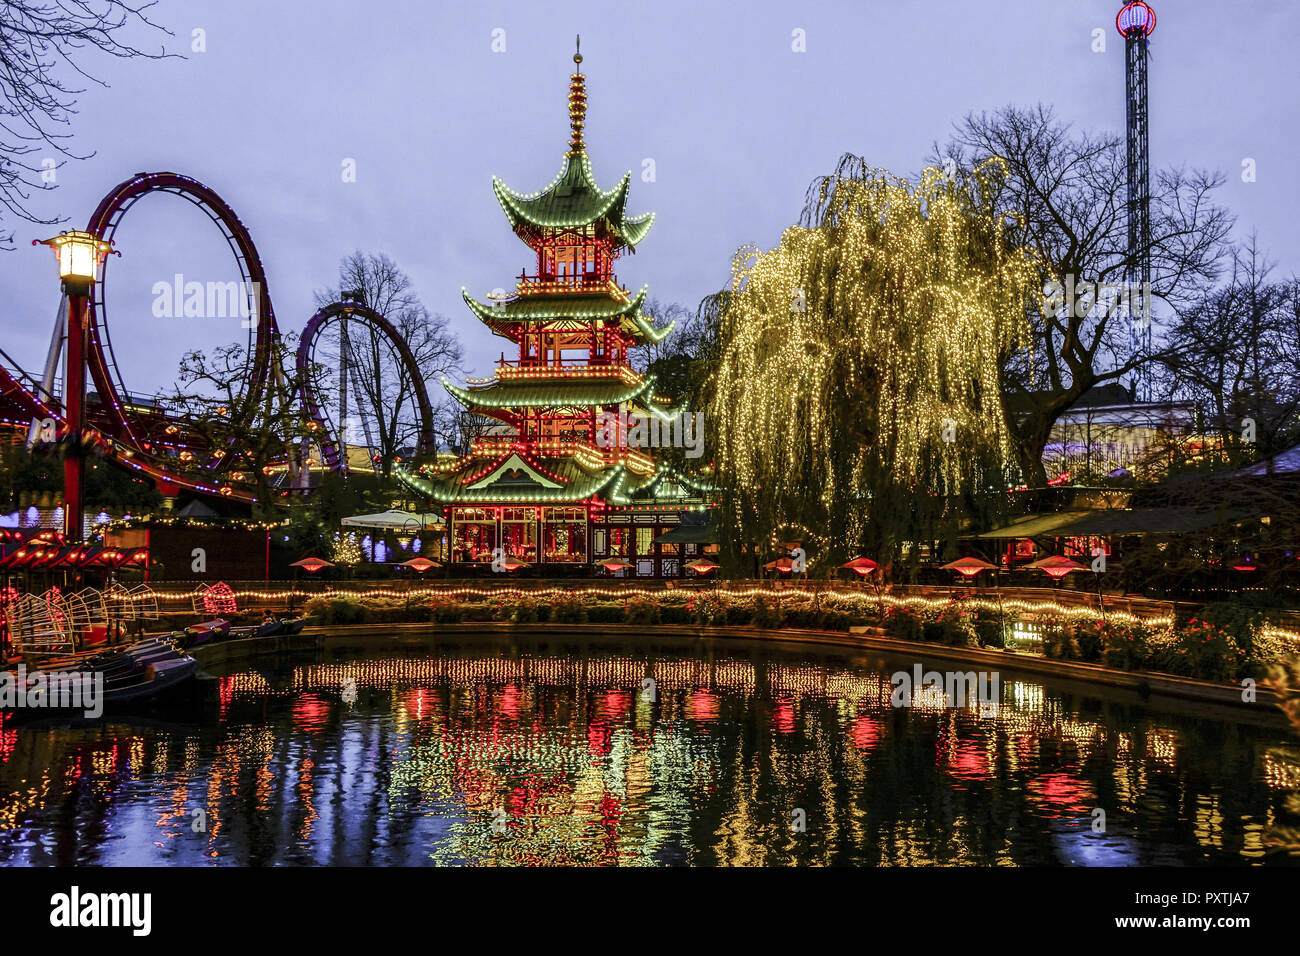 Chinesischer Turm im Tivoli mit Weihnachtsdekoration, Kopenhagen, Dänemark, Europa, Chinese Tower in Tivoli with Christmas decoration, Copenhagen, Den Stock Photo